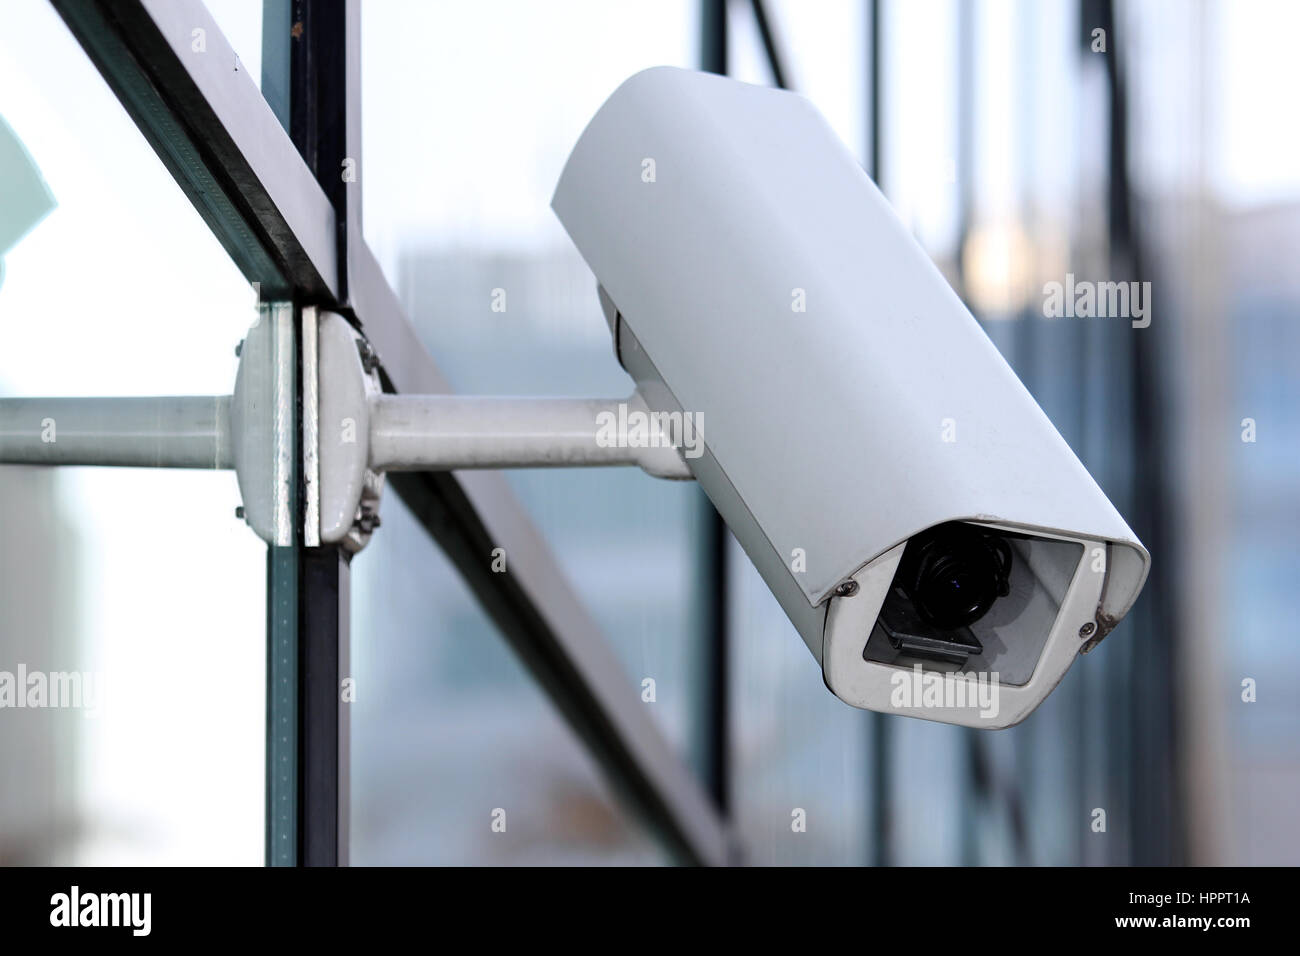 white security cctv camera on glass facade Stock Photo